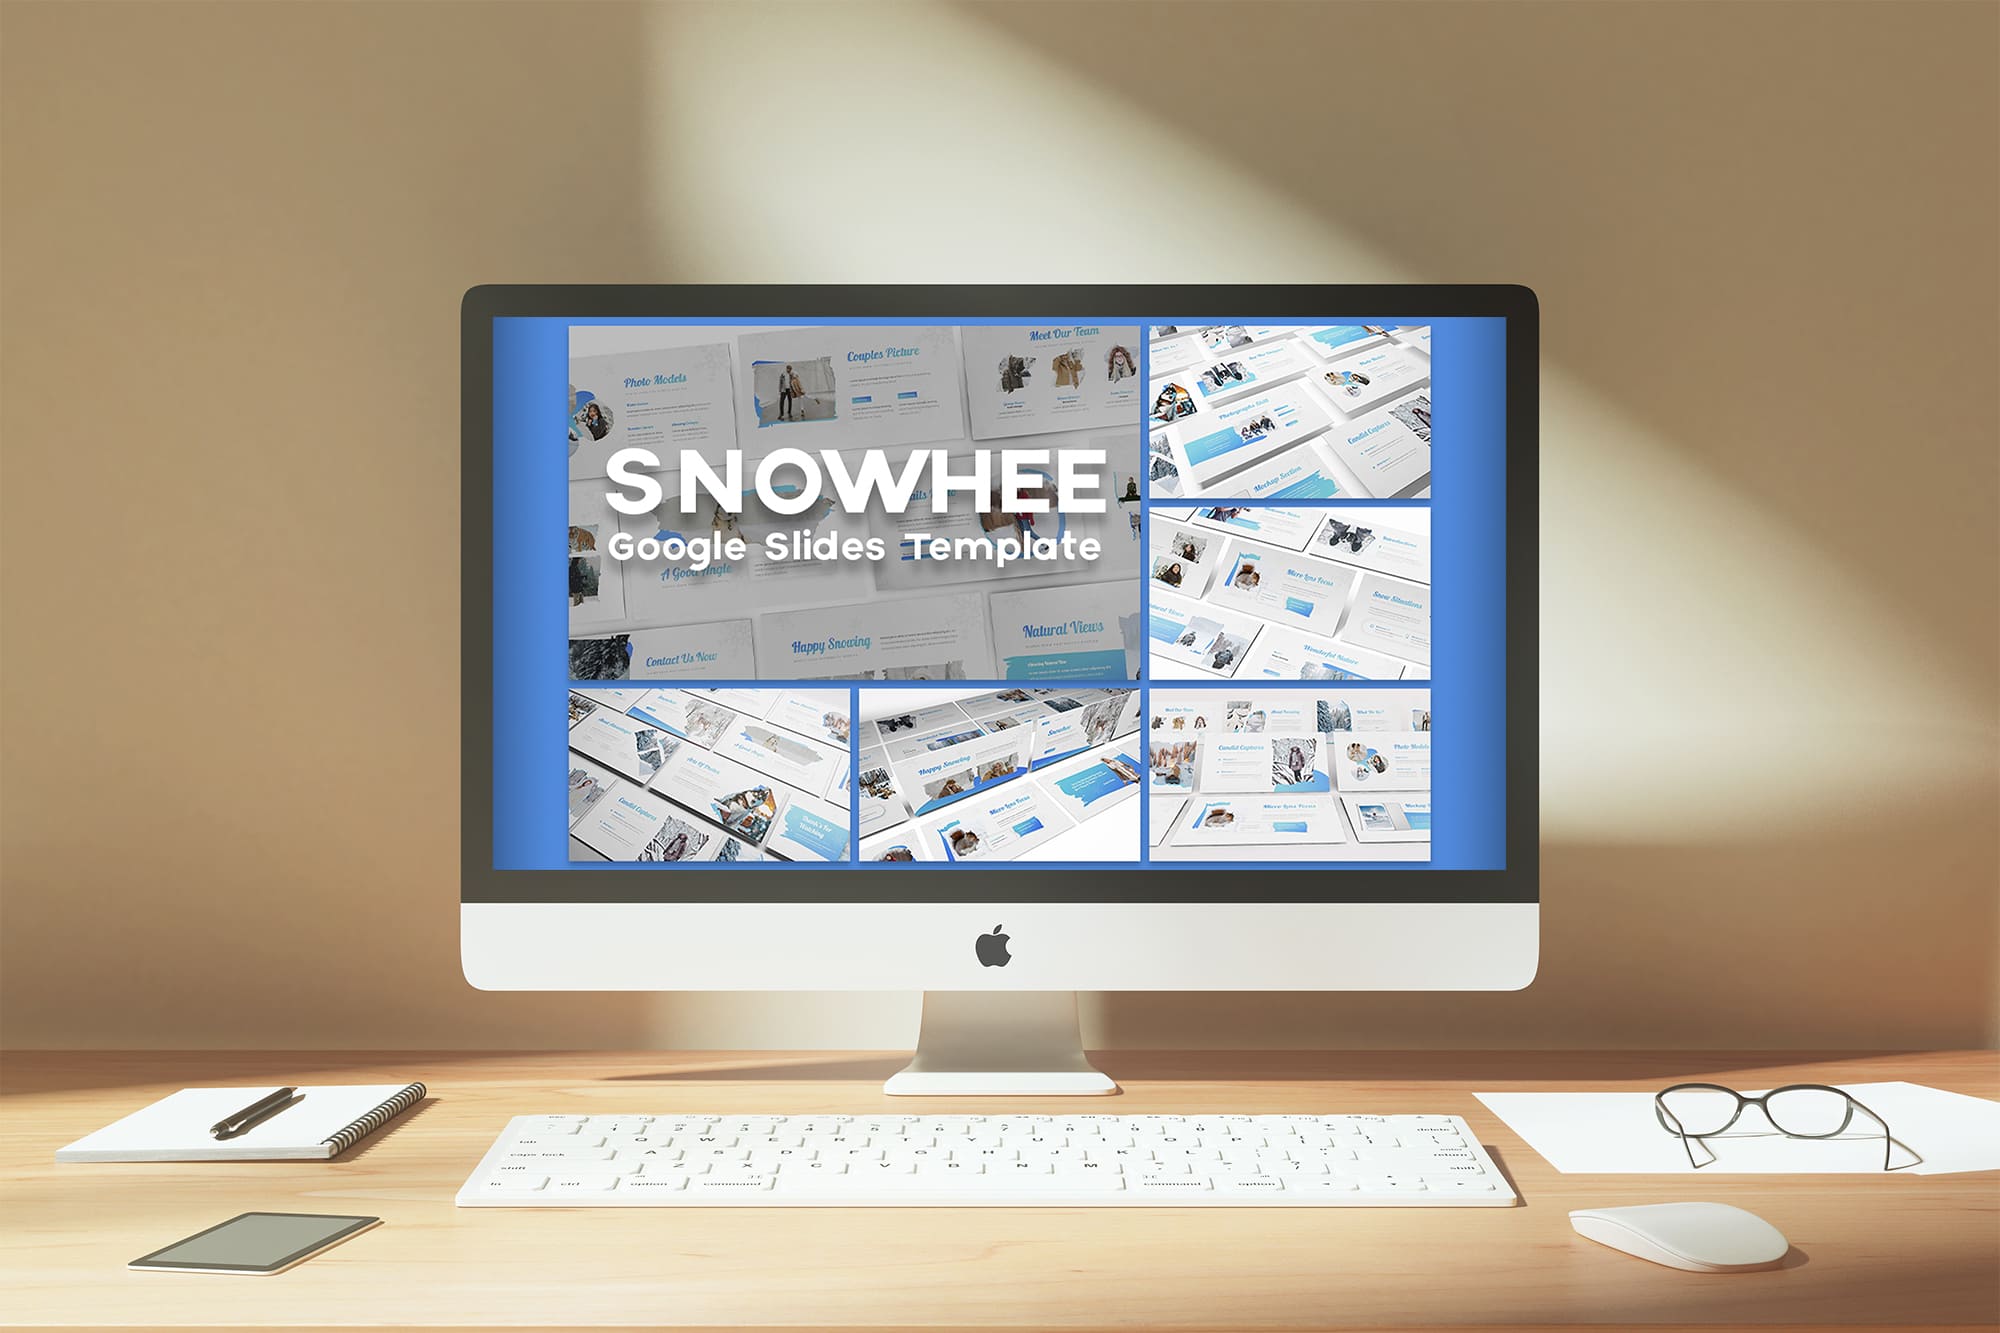 snowhee google slides template desktop mockup.